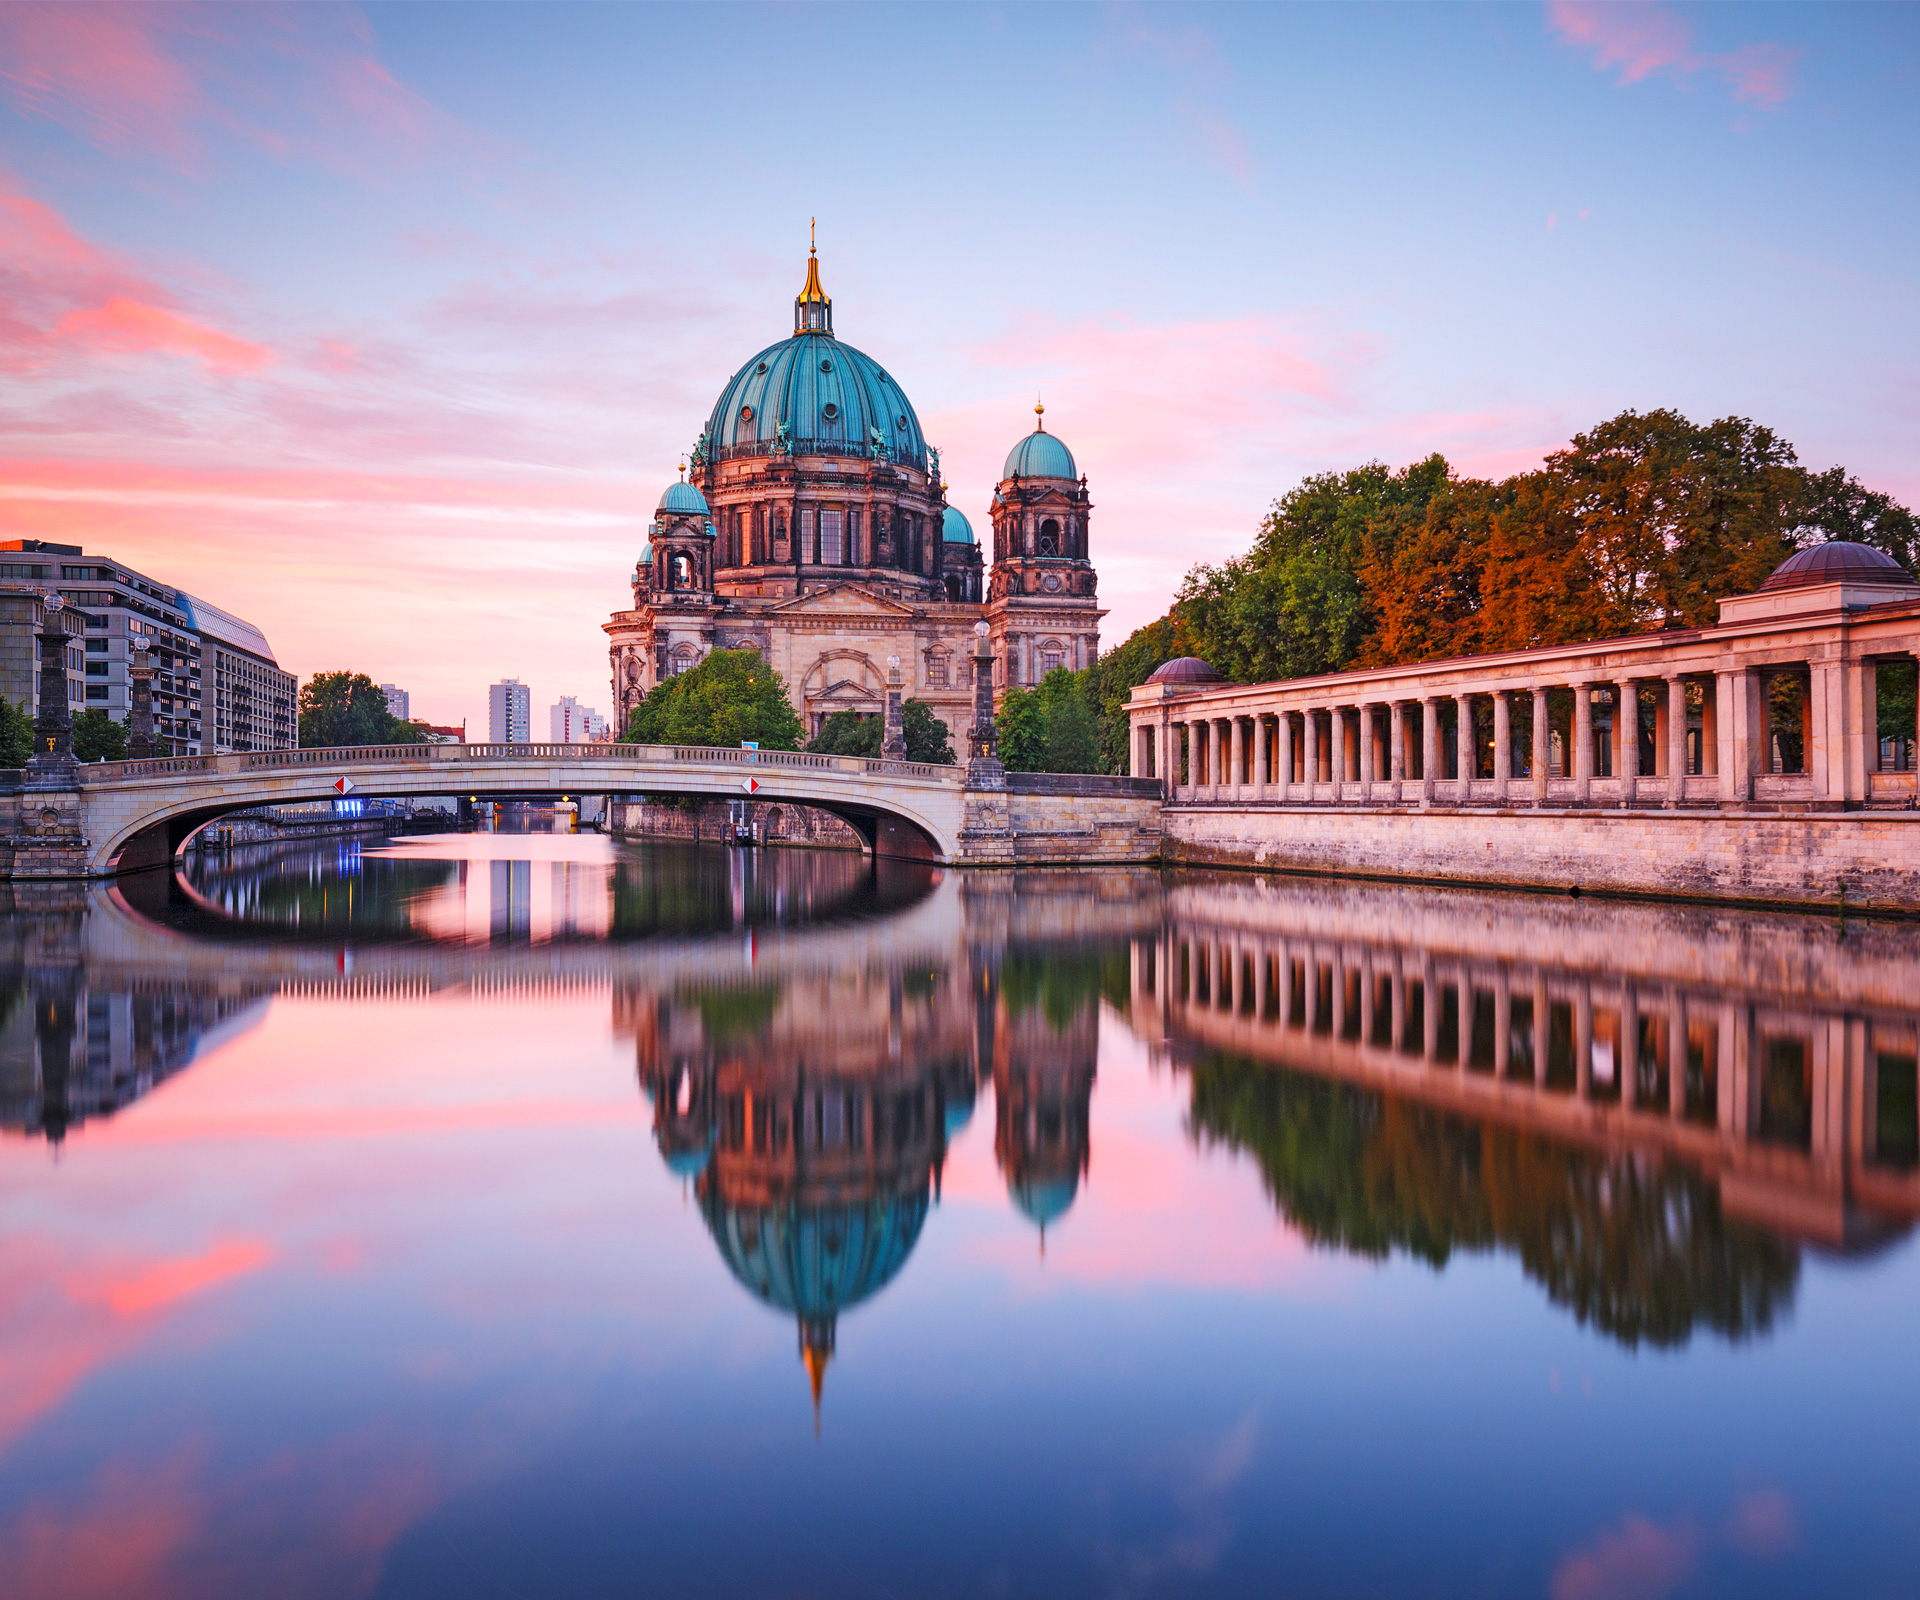 5 reasons to love Berlin